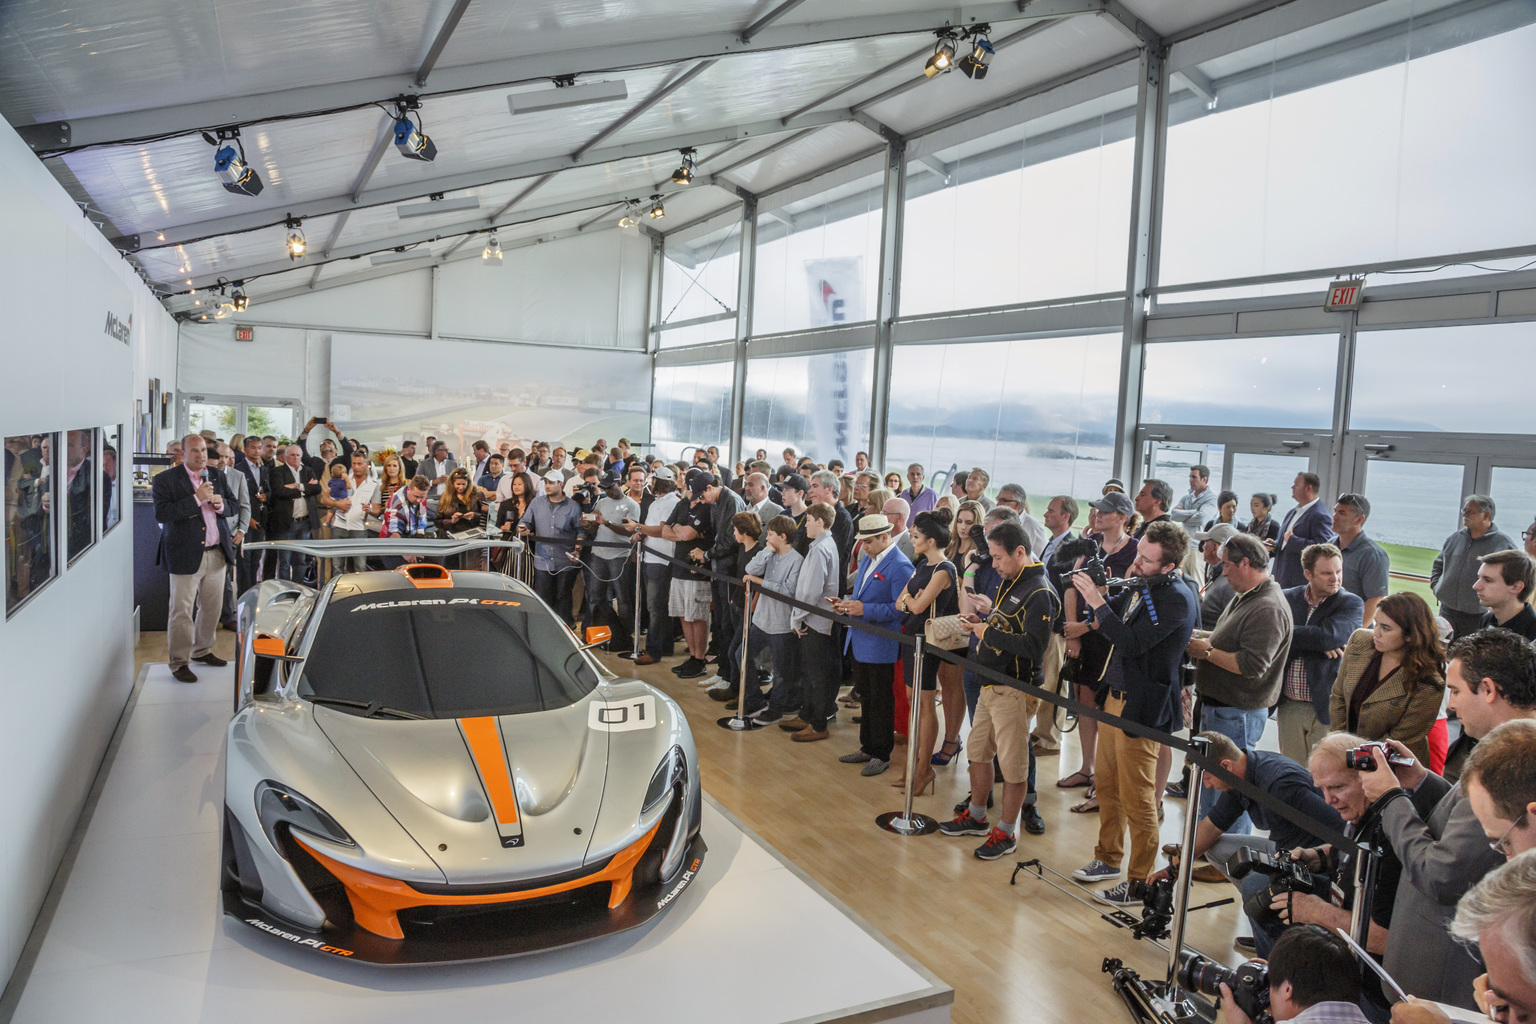 2014 McLaren P1 GTR design concept Gallery